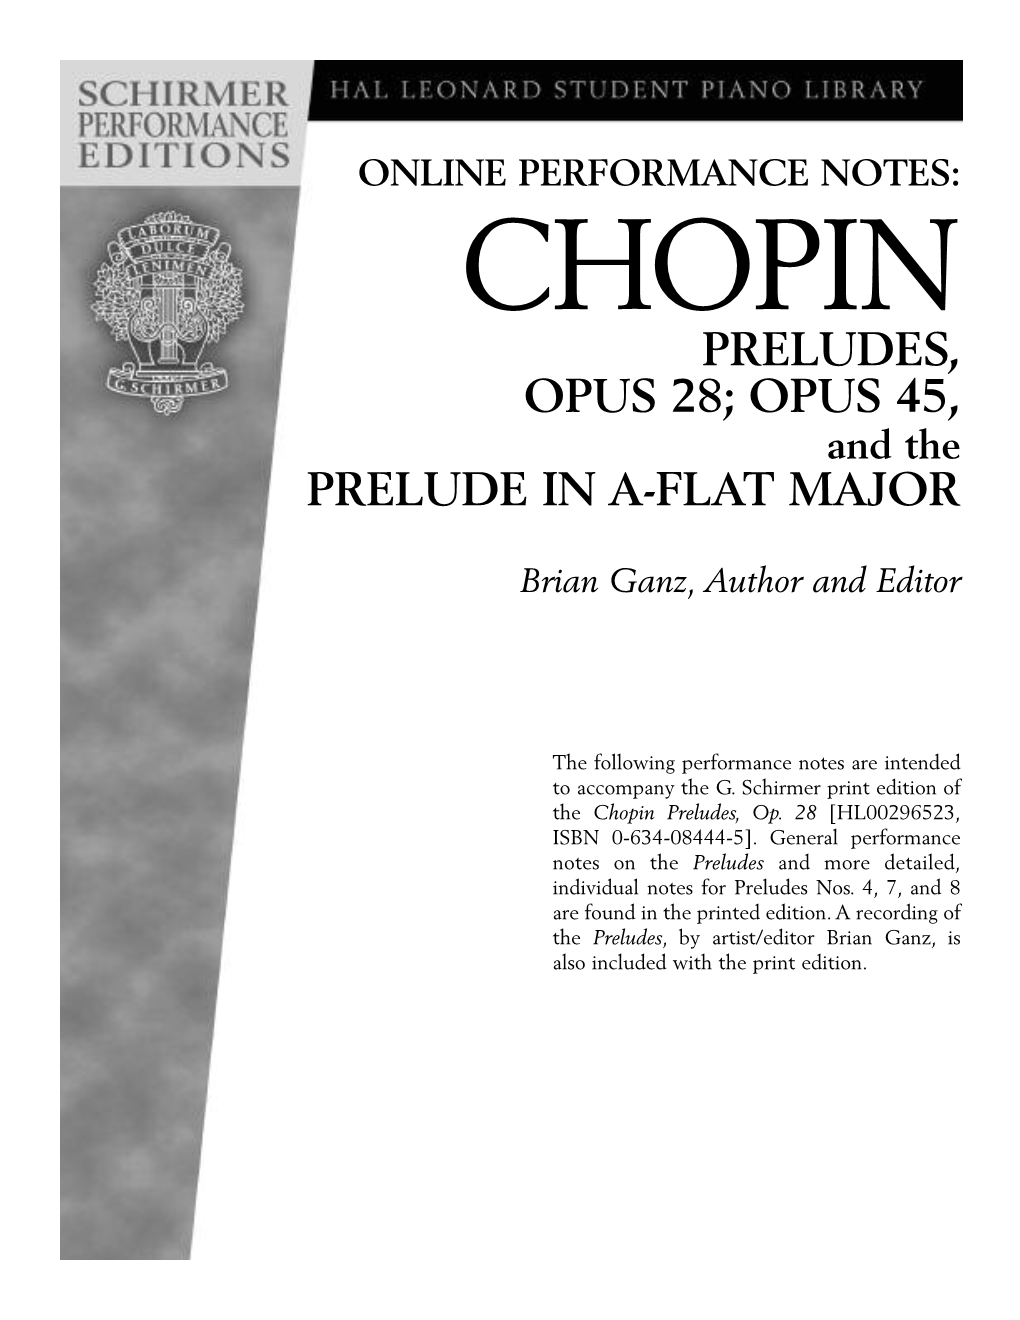 Opus 45, Prelude in A-Flat Major